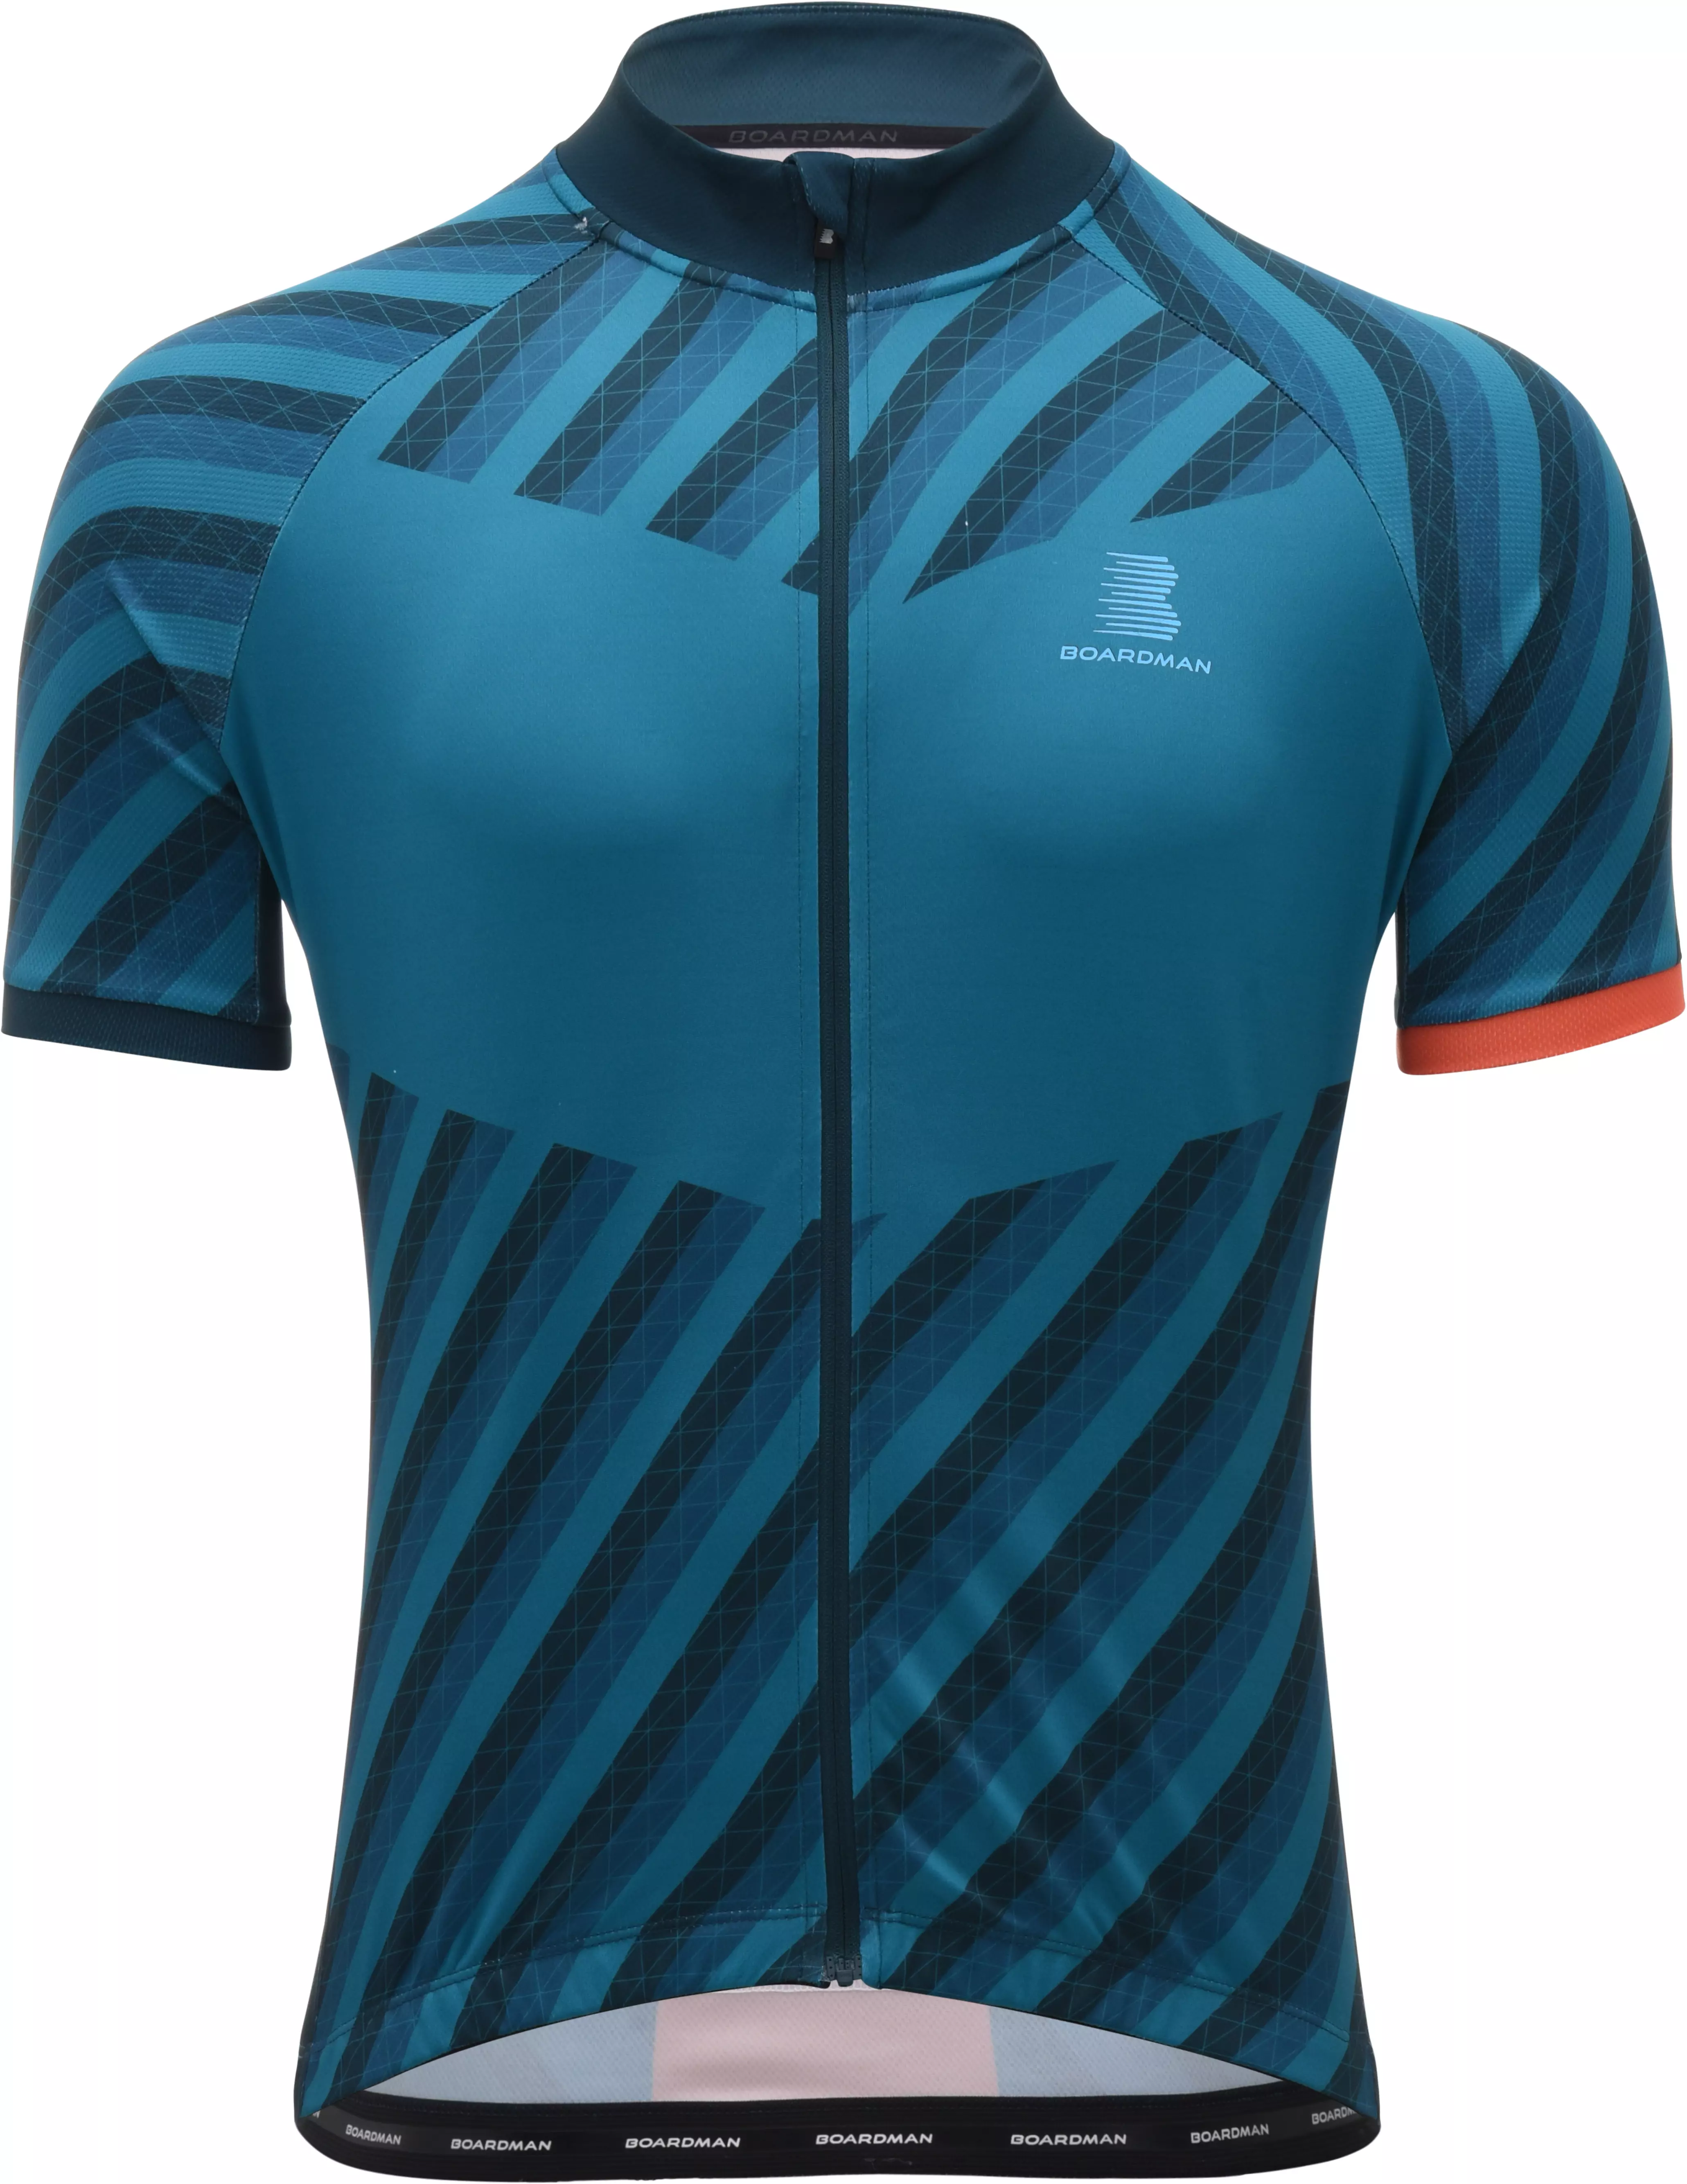 boardman cycling clothing